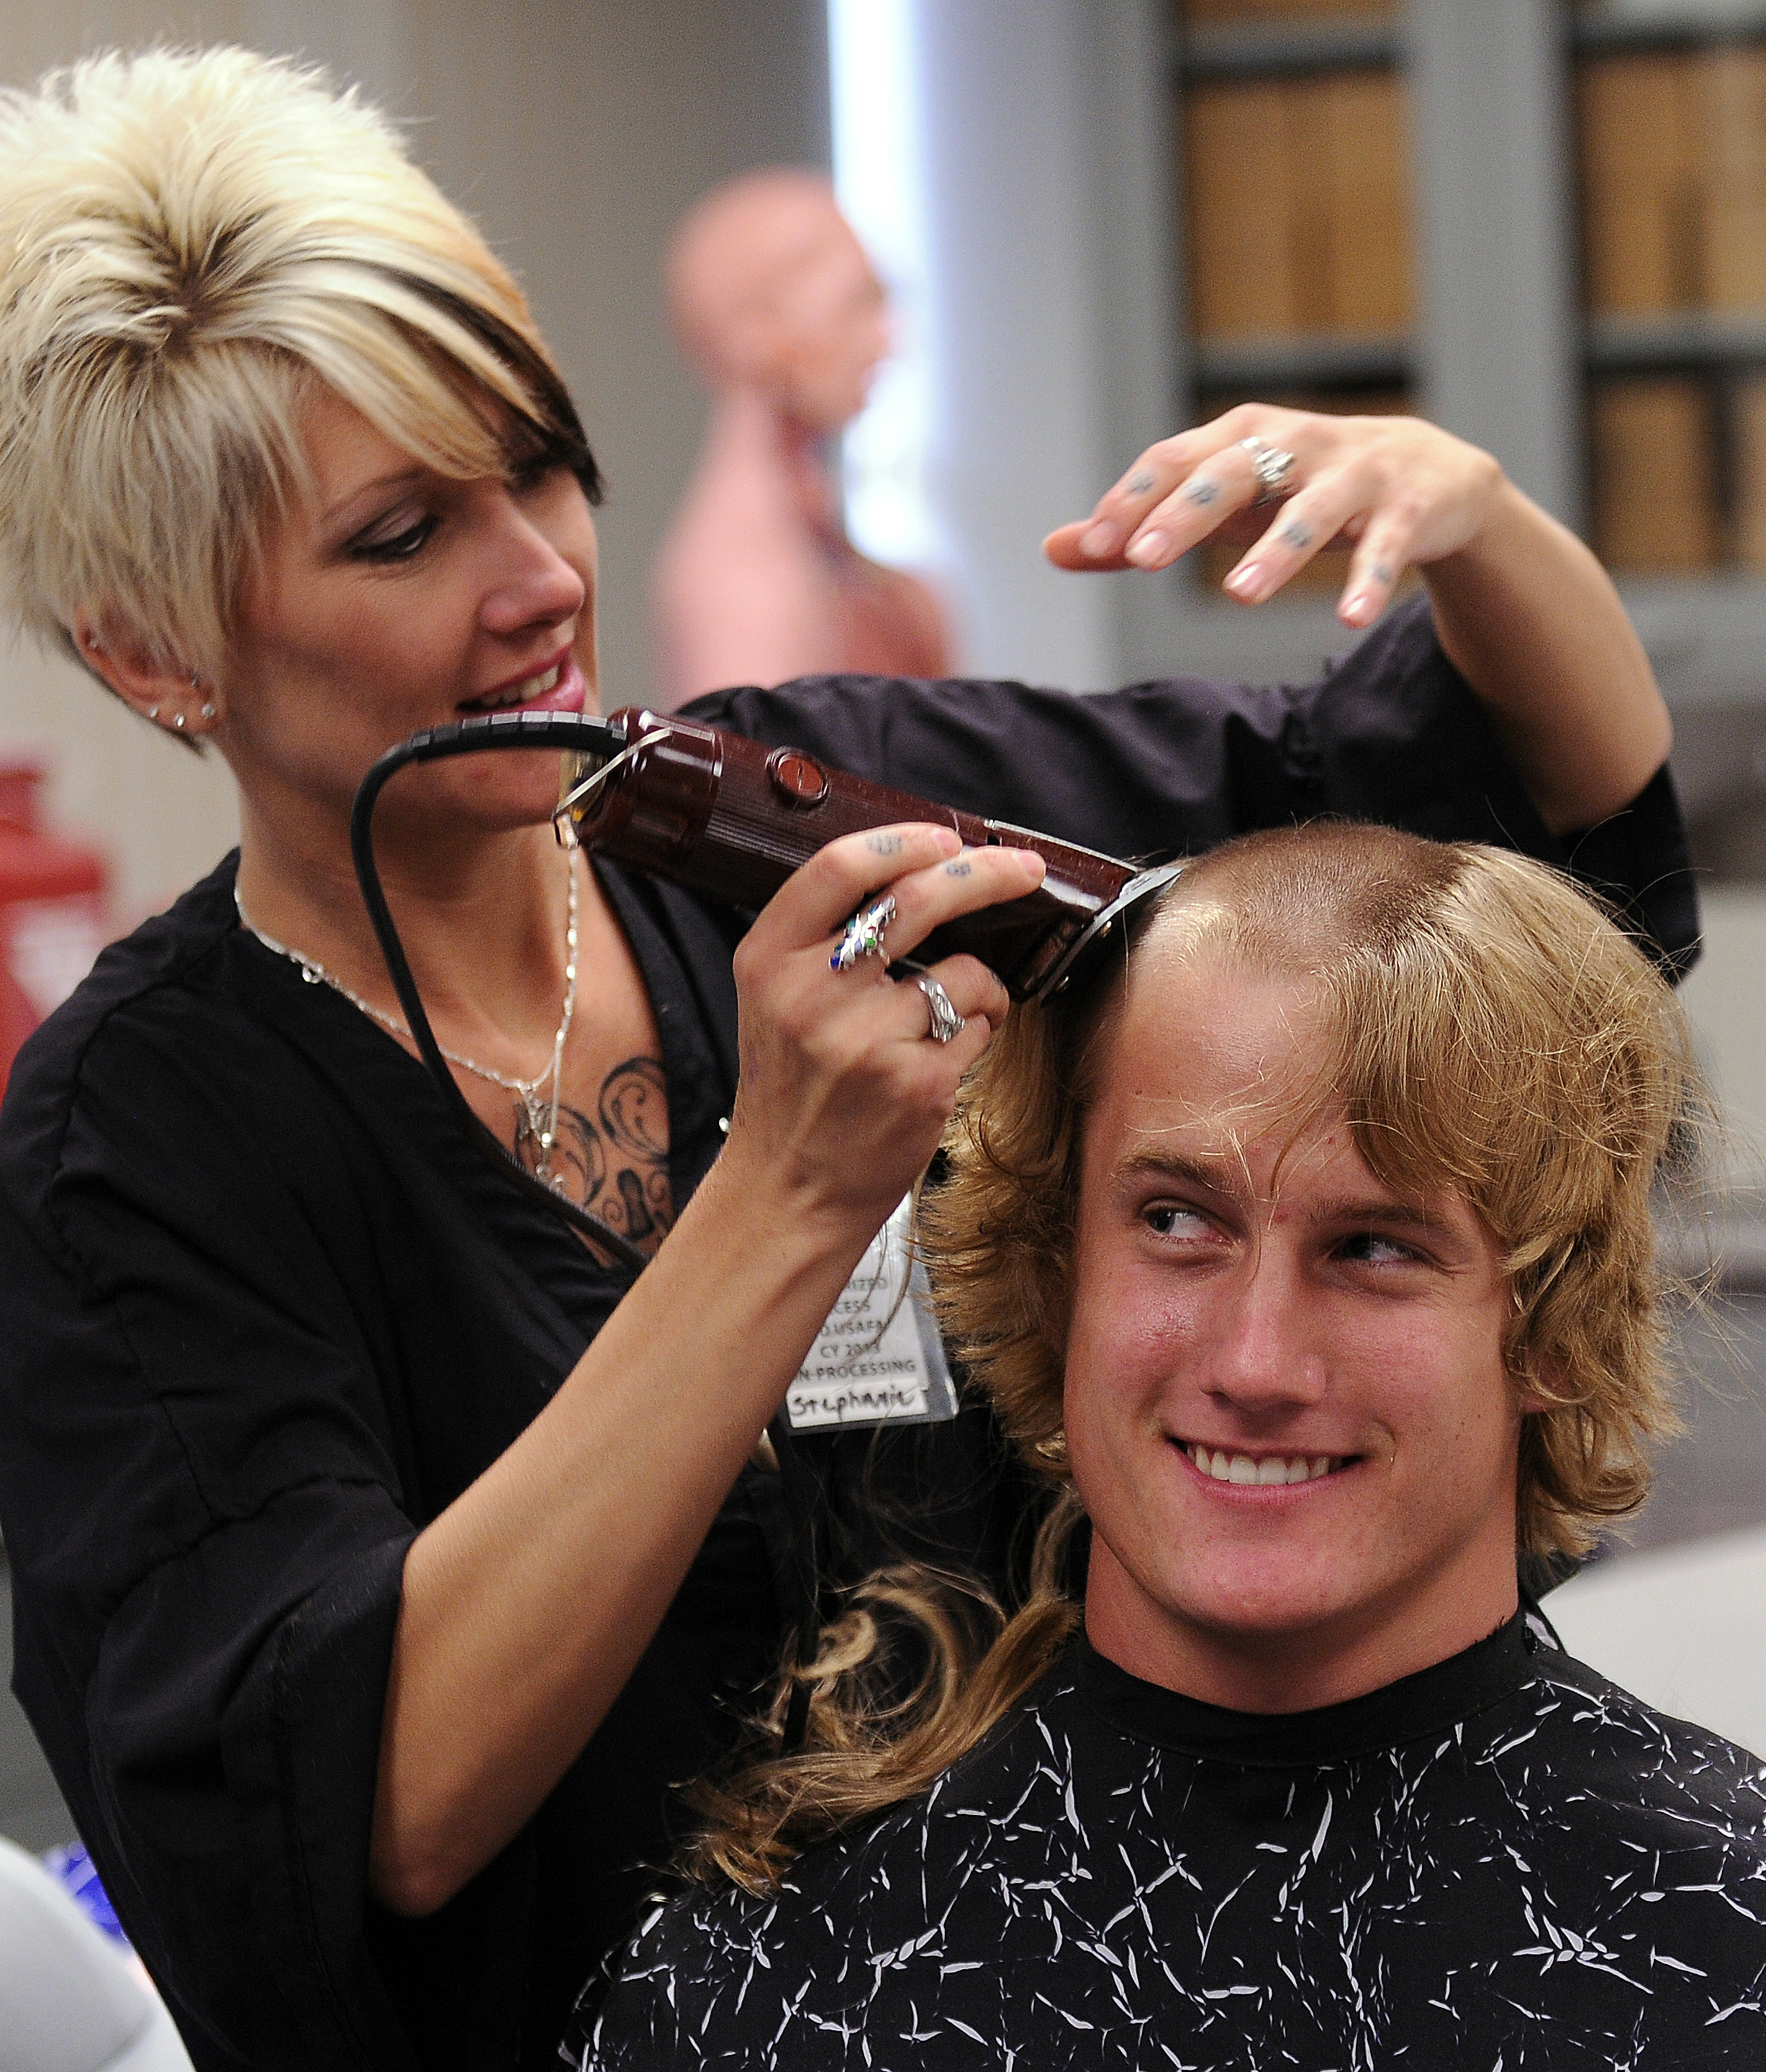 Army Boot Camp Haircut 2015awritersloft